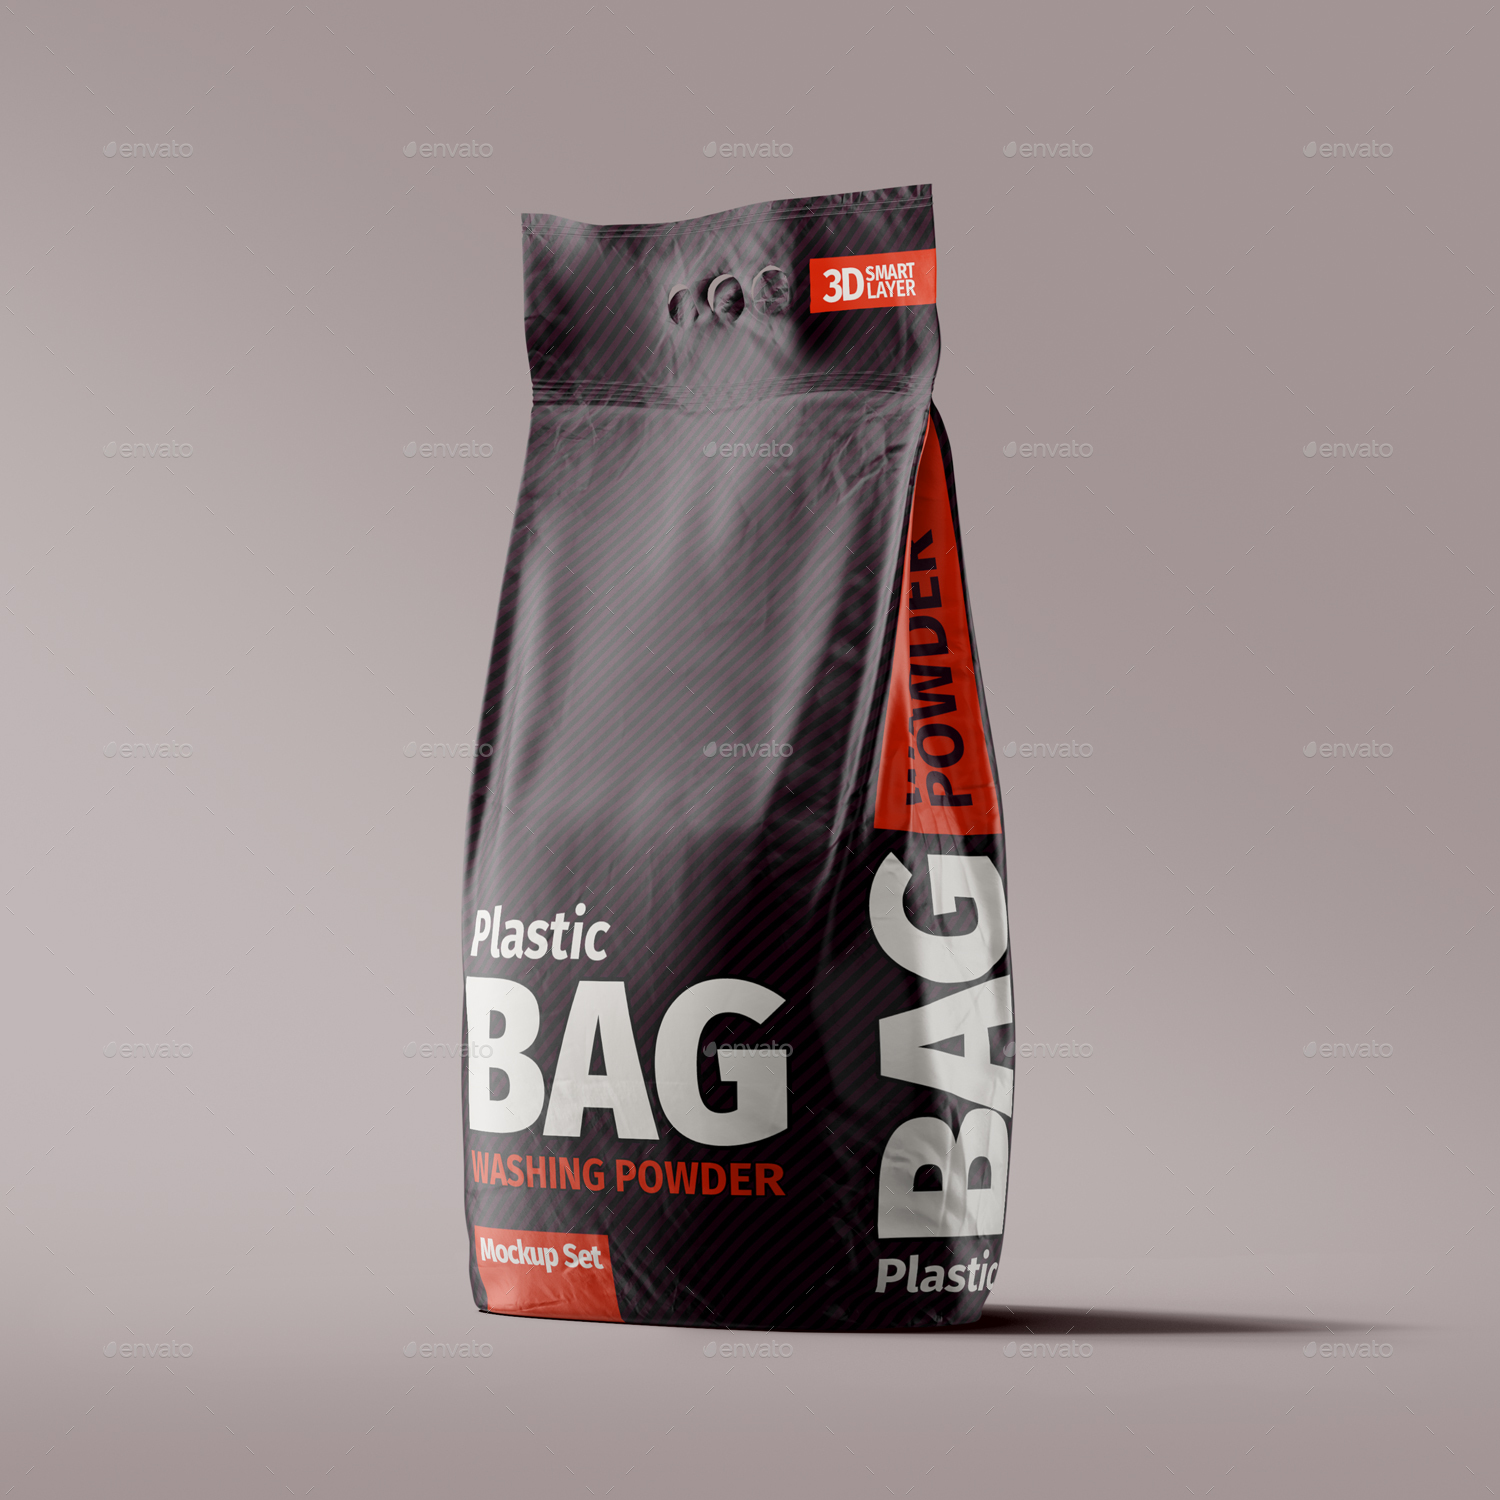 Download Plastic Bag Washing Powder Mockup Set by Radetzki | GraphicRiver